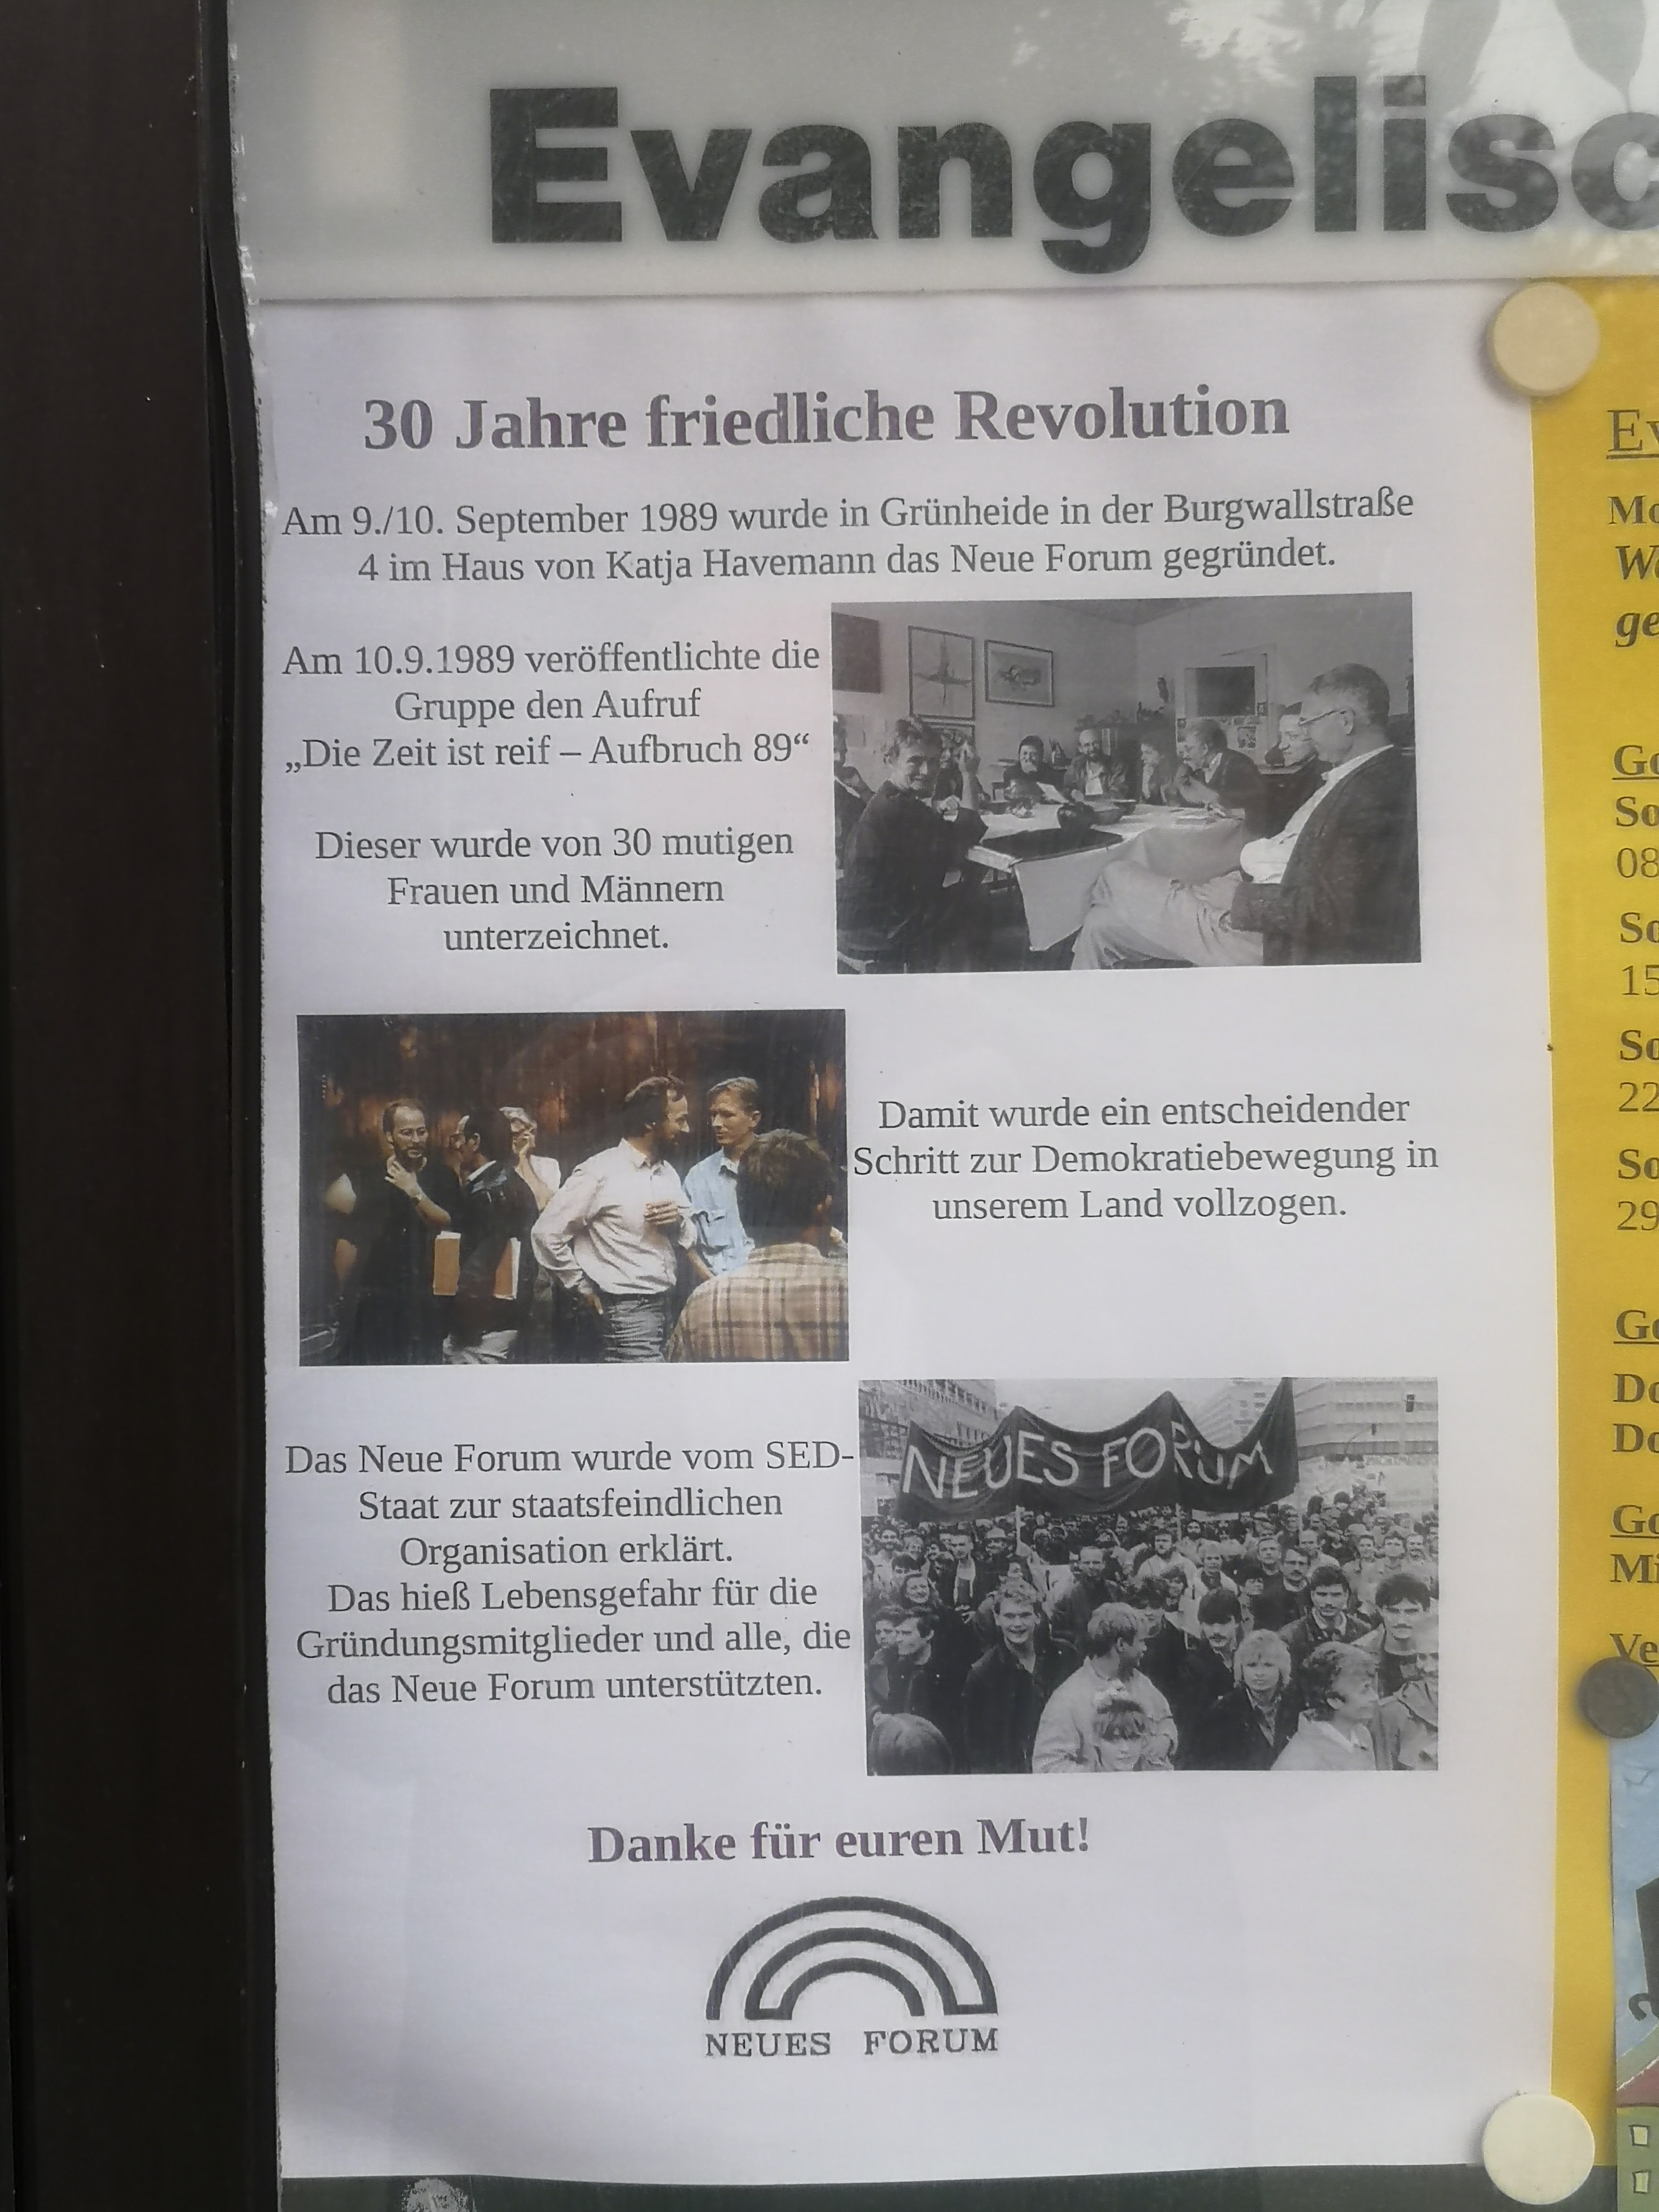 Ein an die Gründung des Neuen Forums in Grünheide am 9./10. September 1989 erinnernder Text am 7. September 2019 in Grünheide. Farbfoto: Erwin Thomasius.